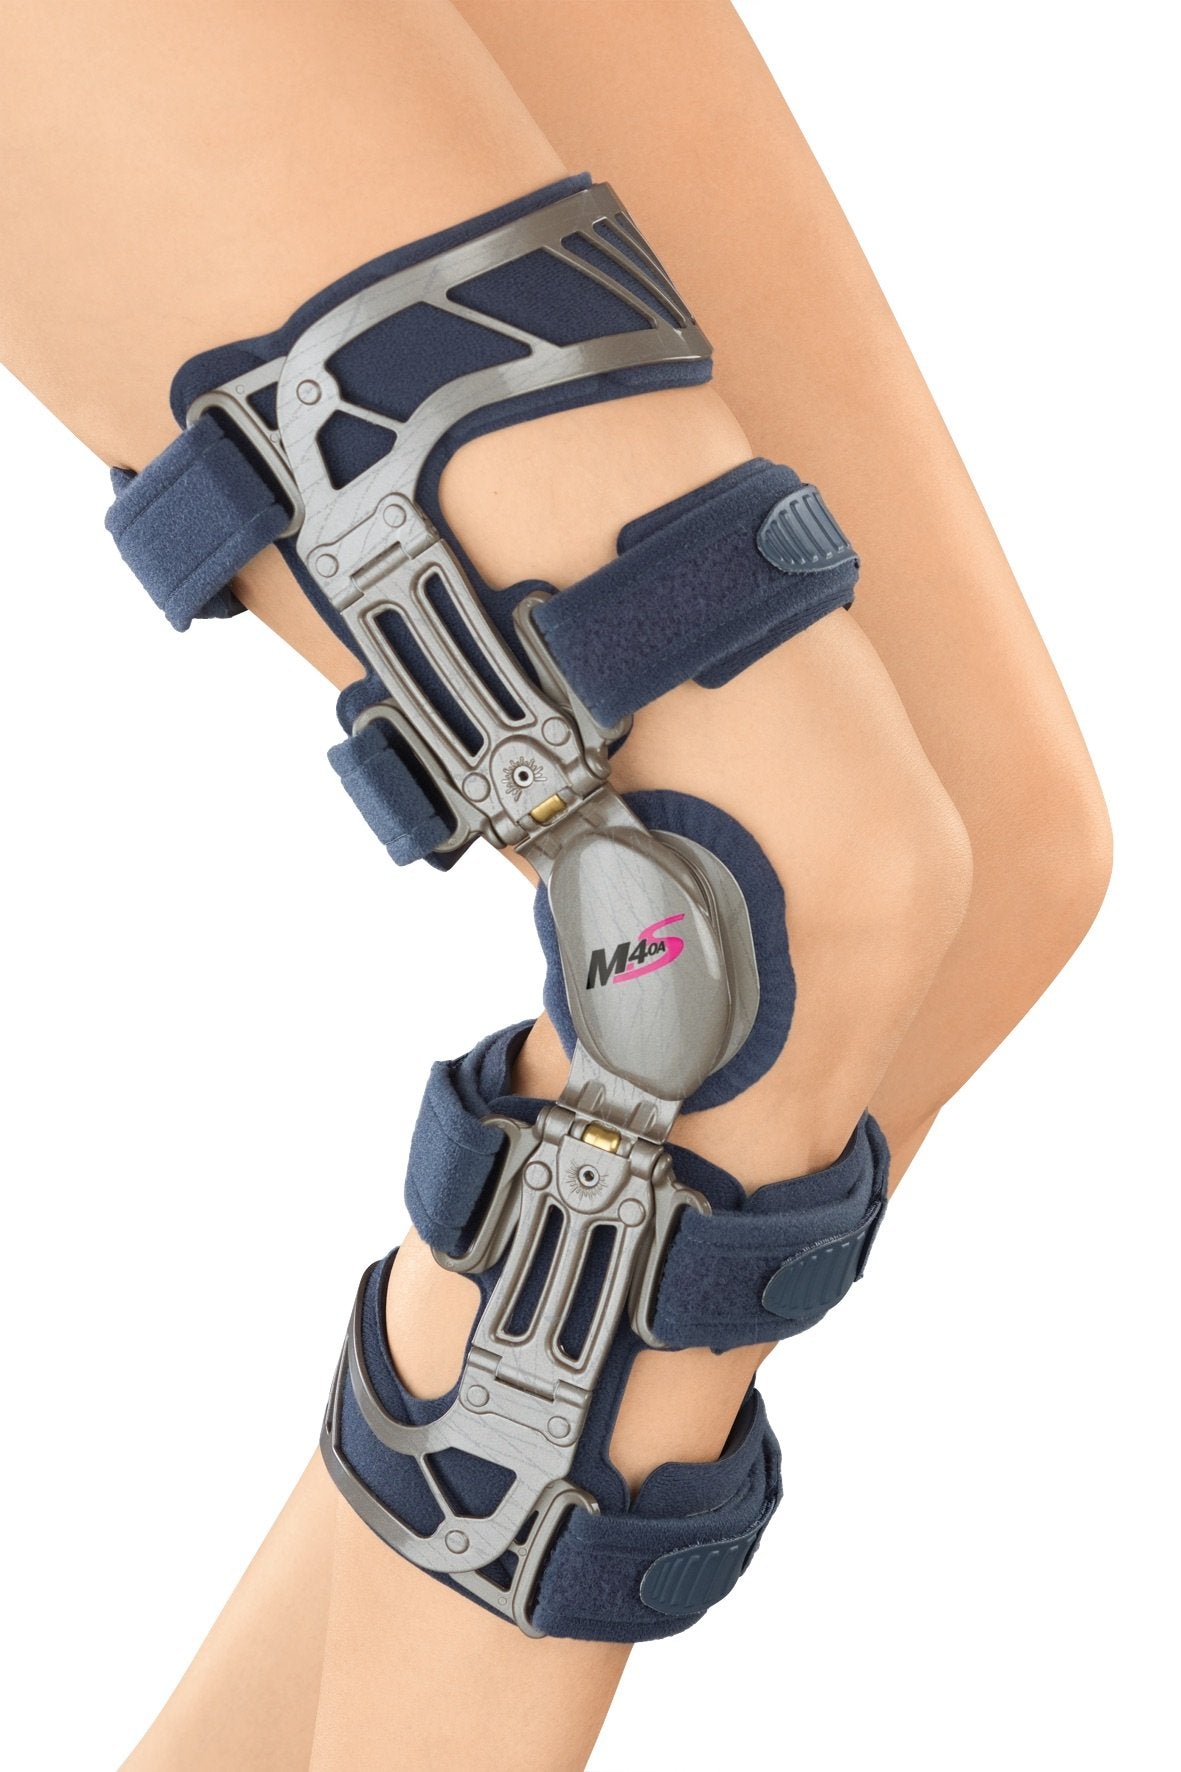 M.4s comfort knee brace